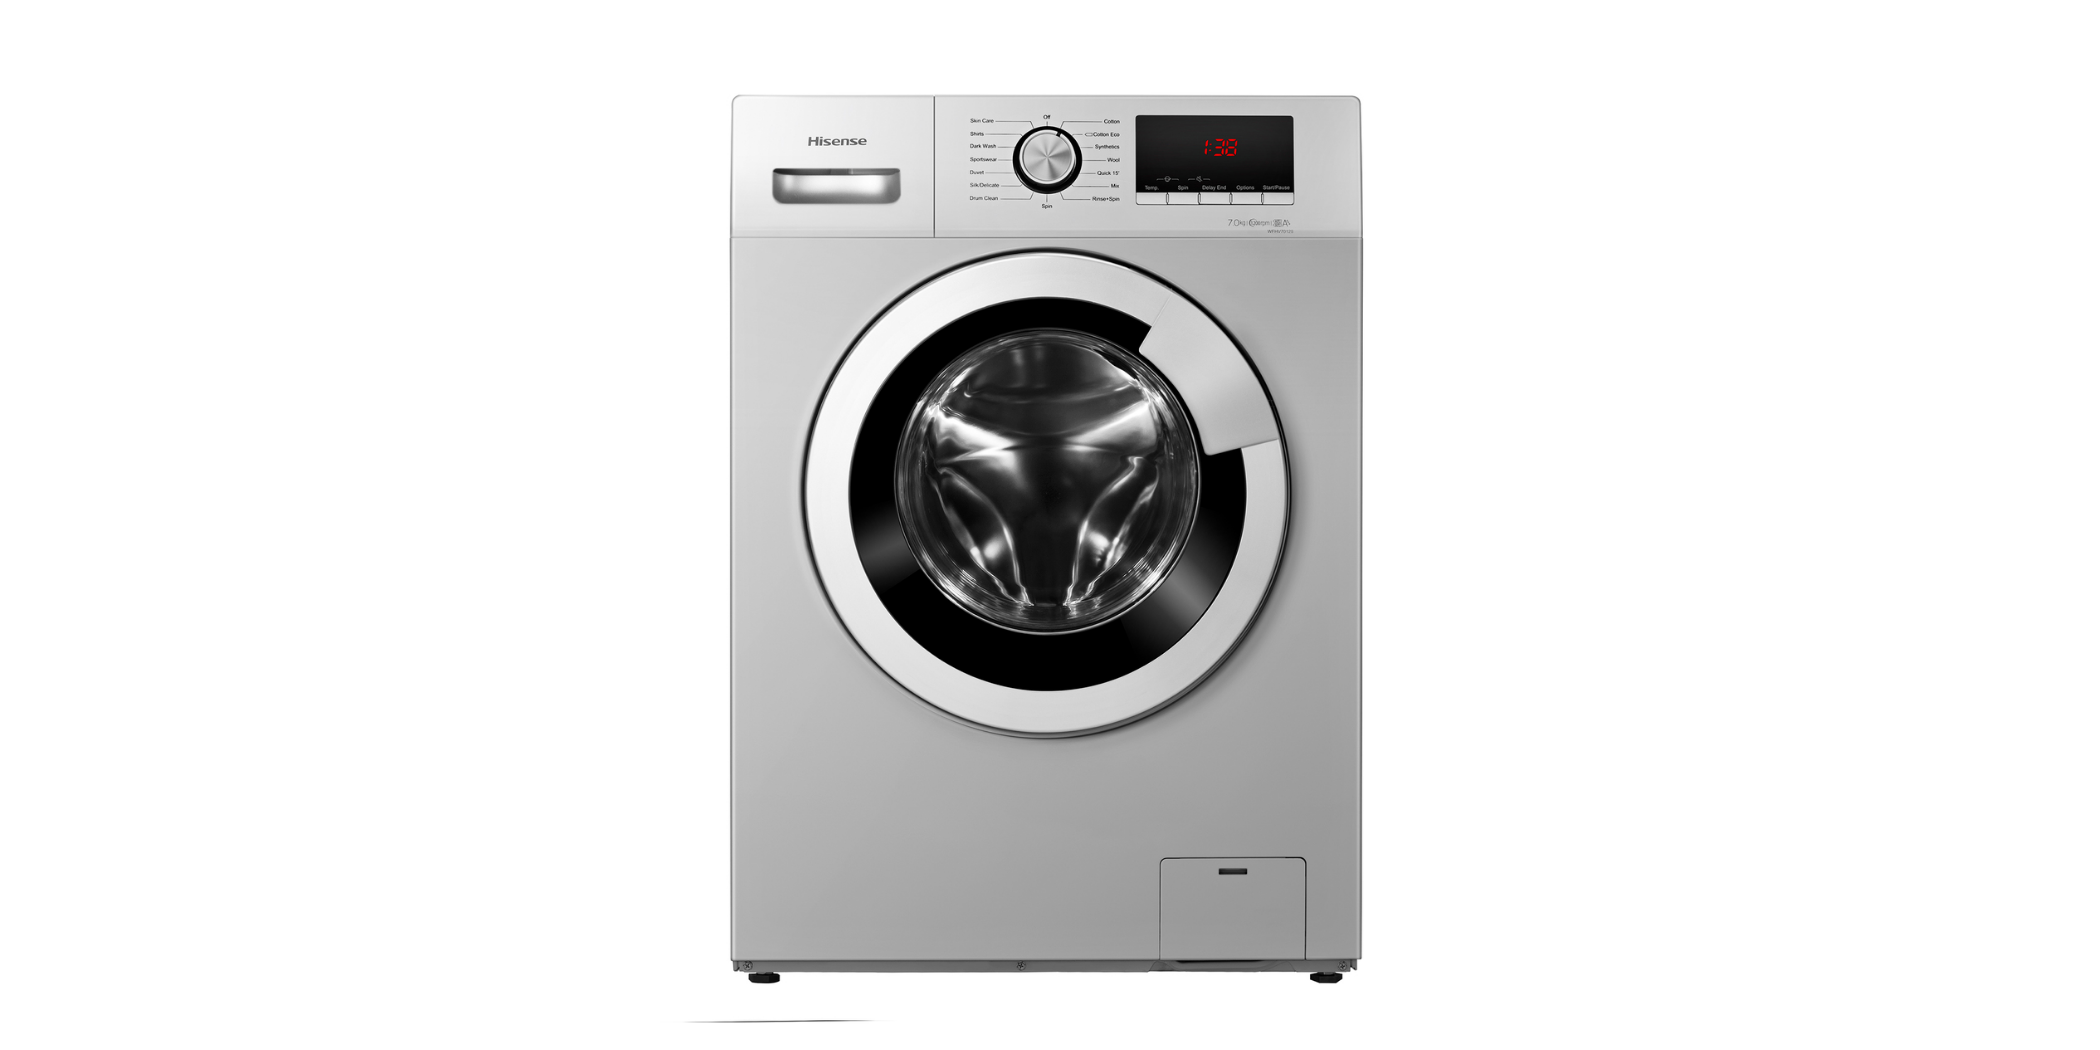 Hisense WFHV7012S Washing Machine